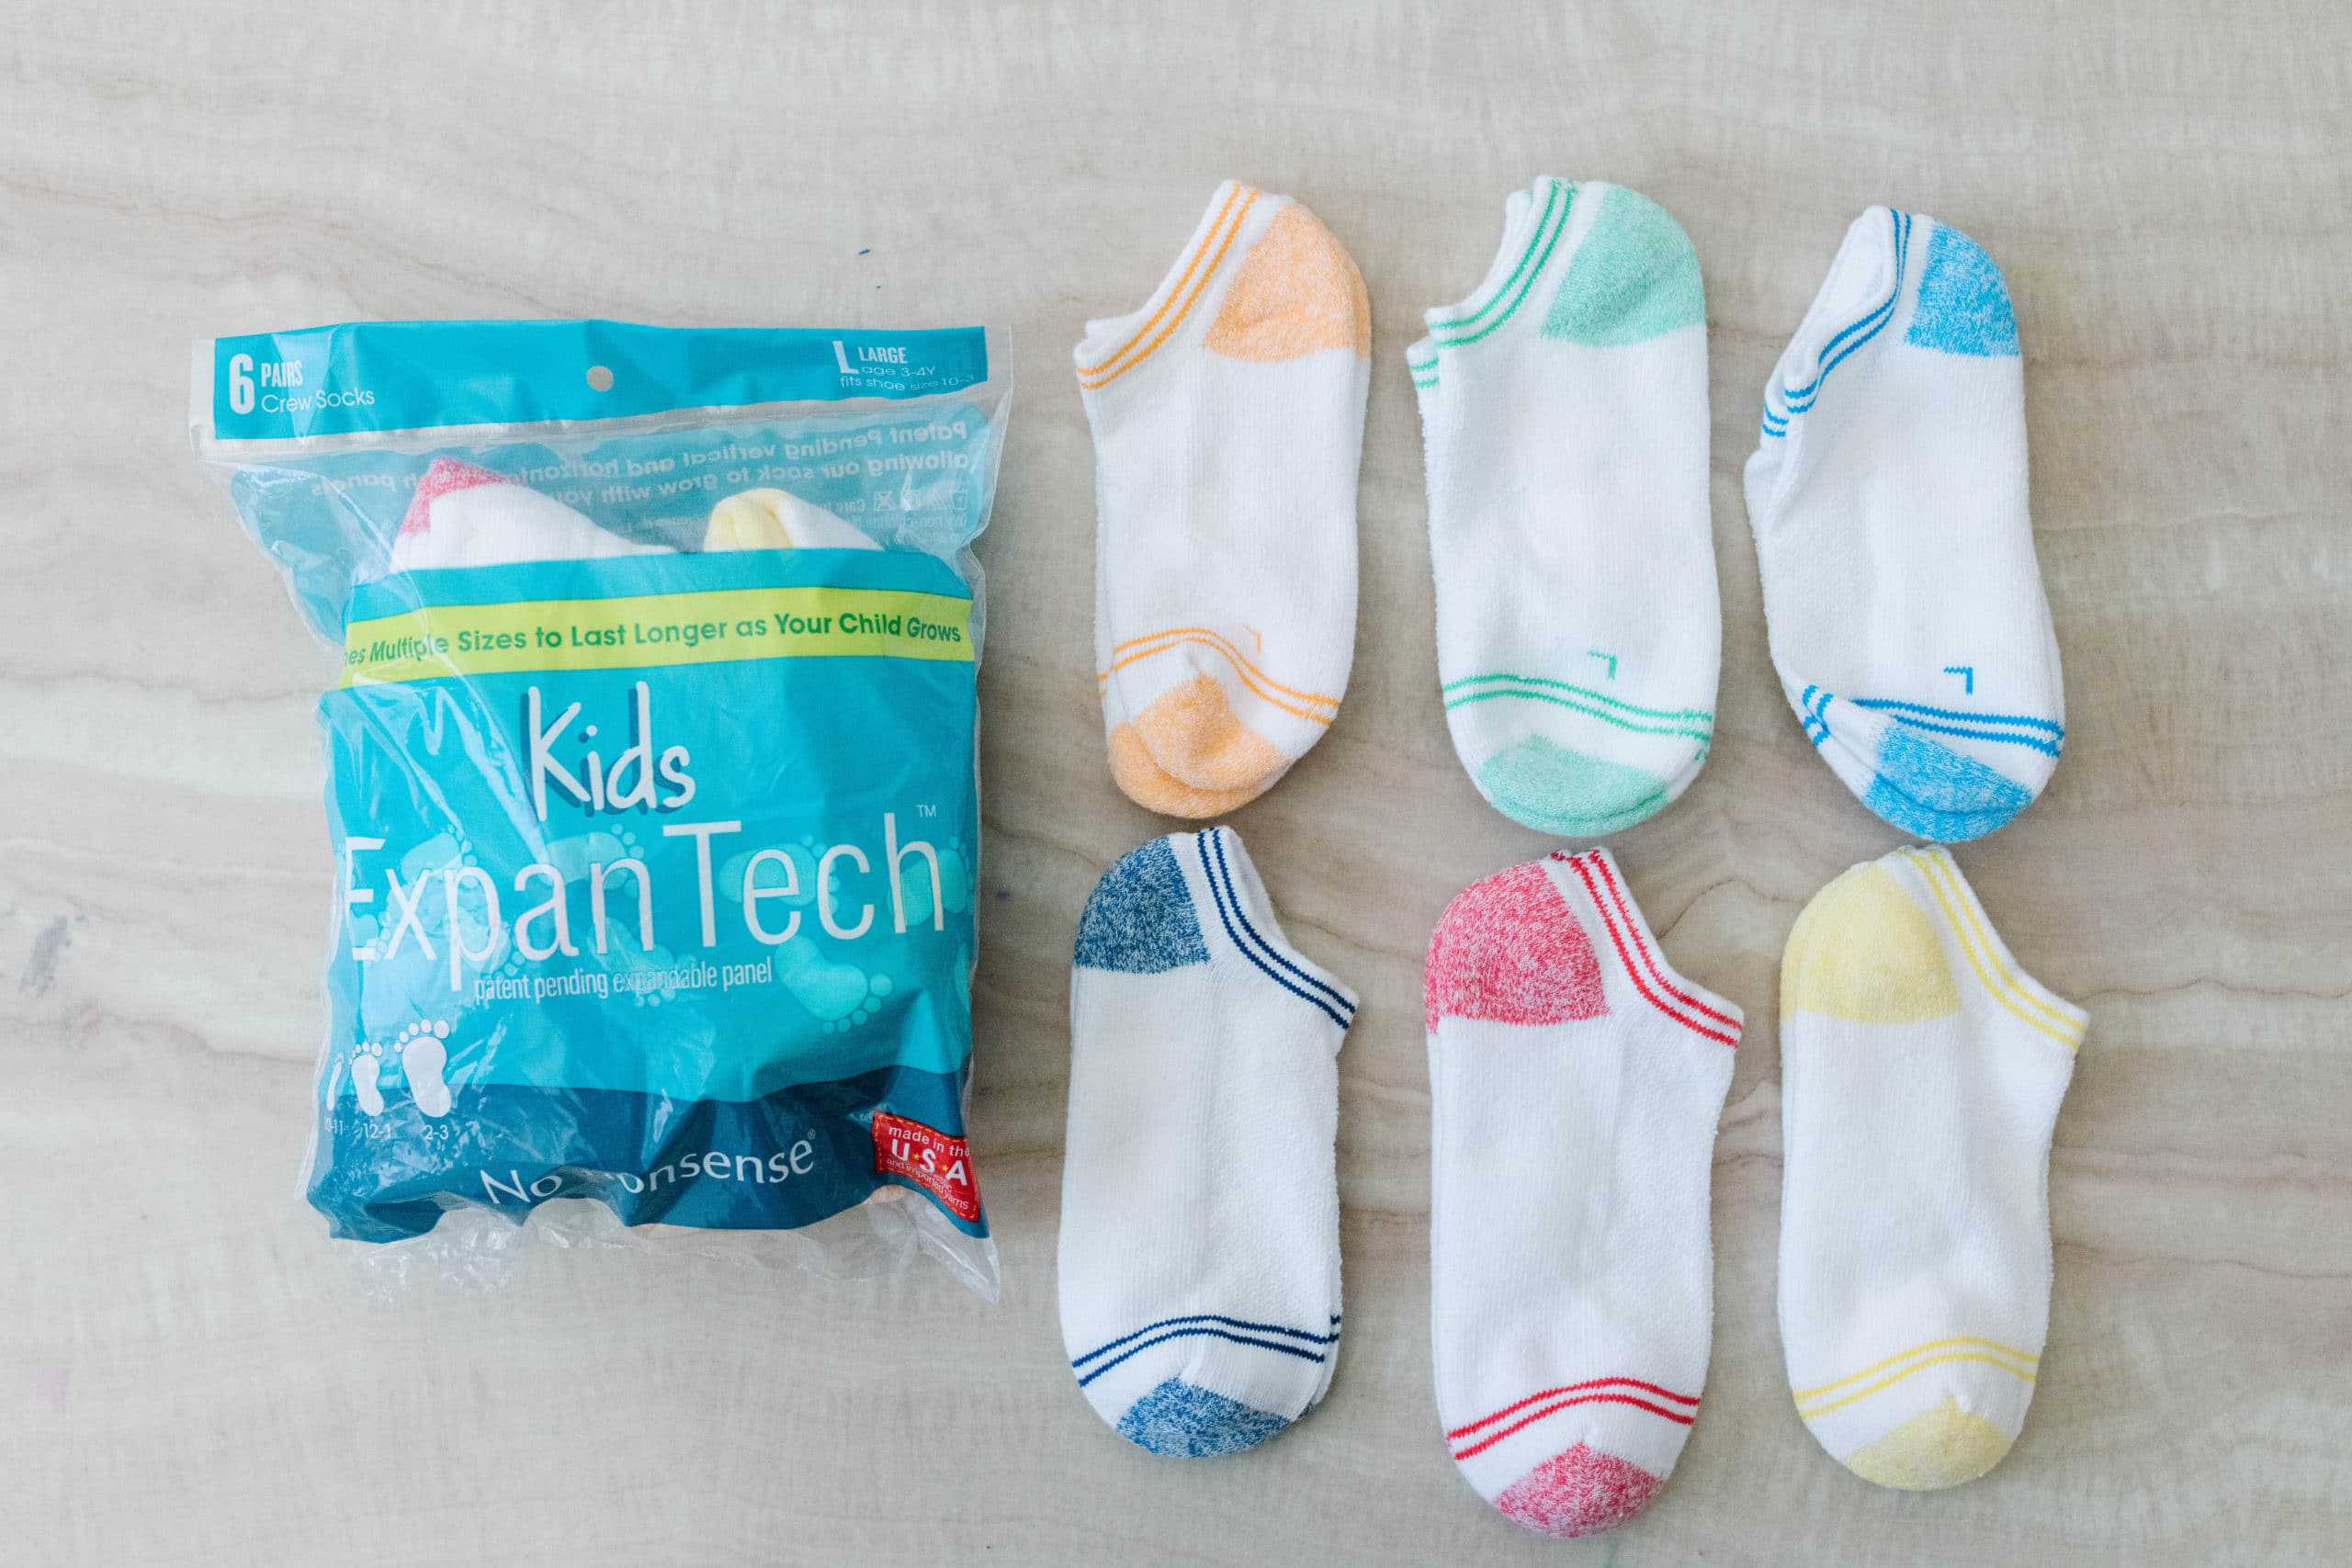 ExpanTech Kids Socks from No nonsense